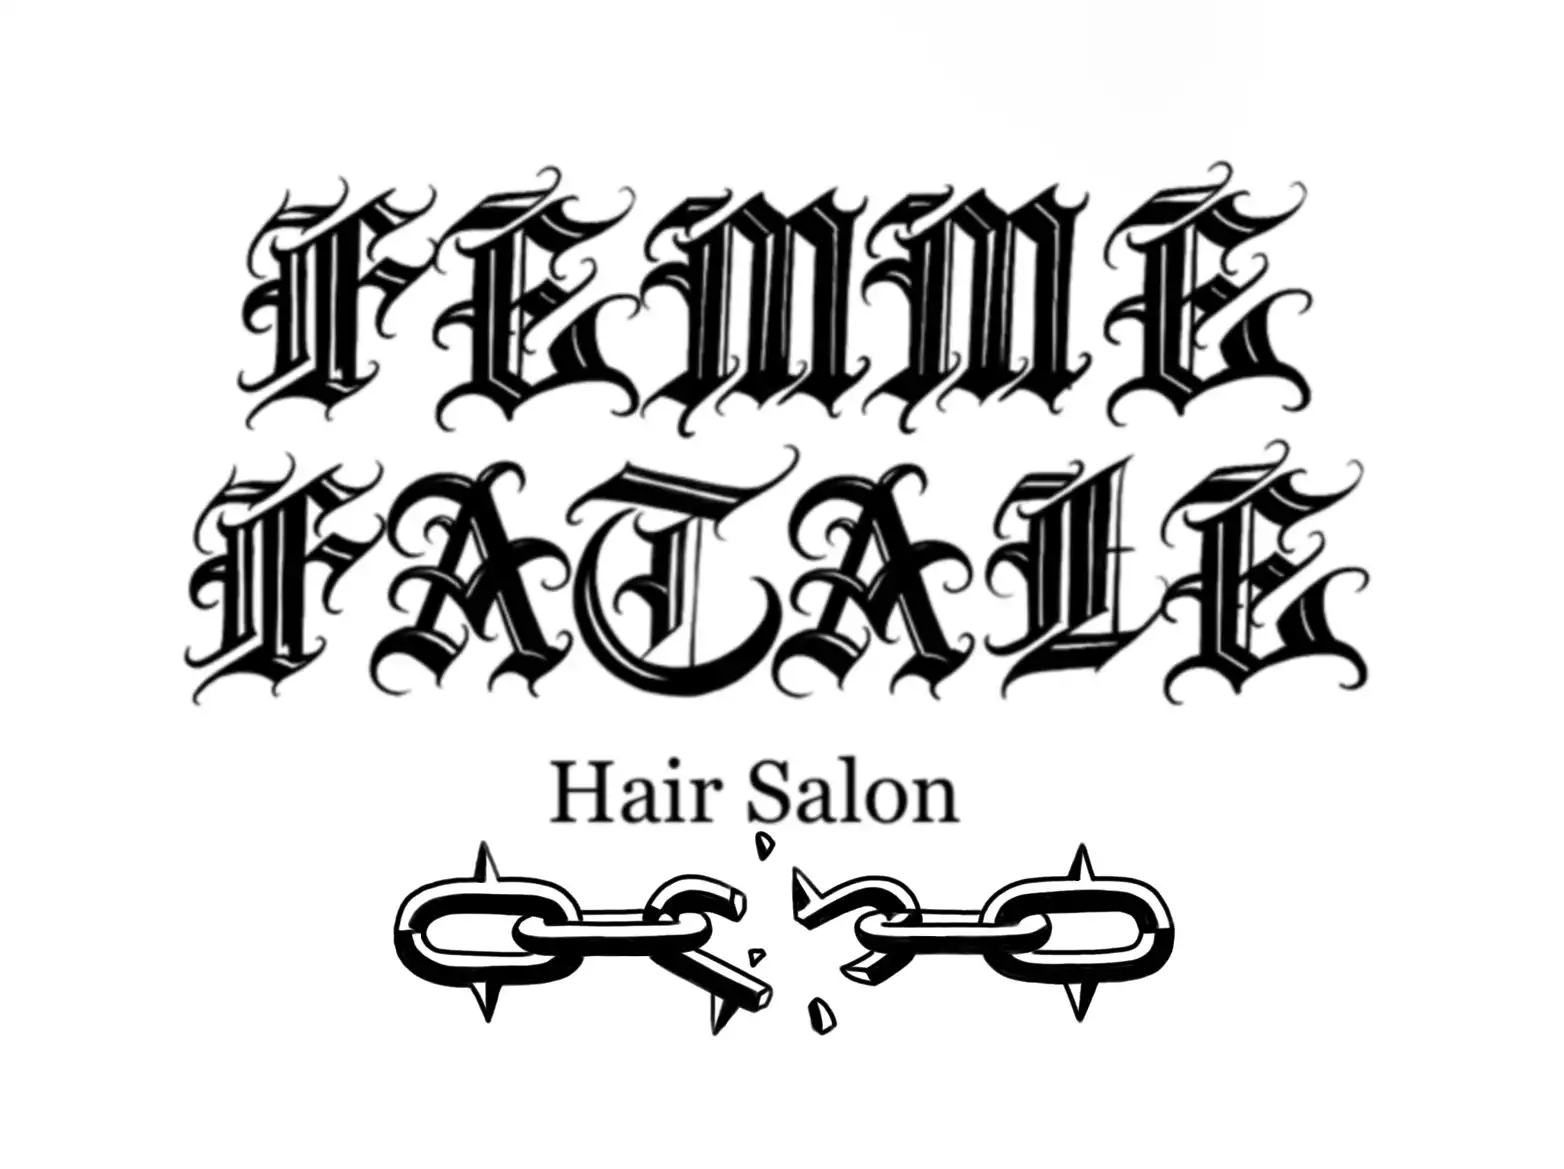 Femme Fatale Hair salon Profile Image